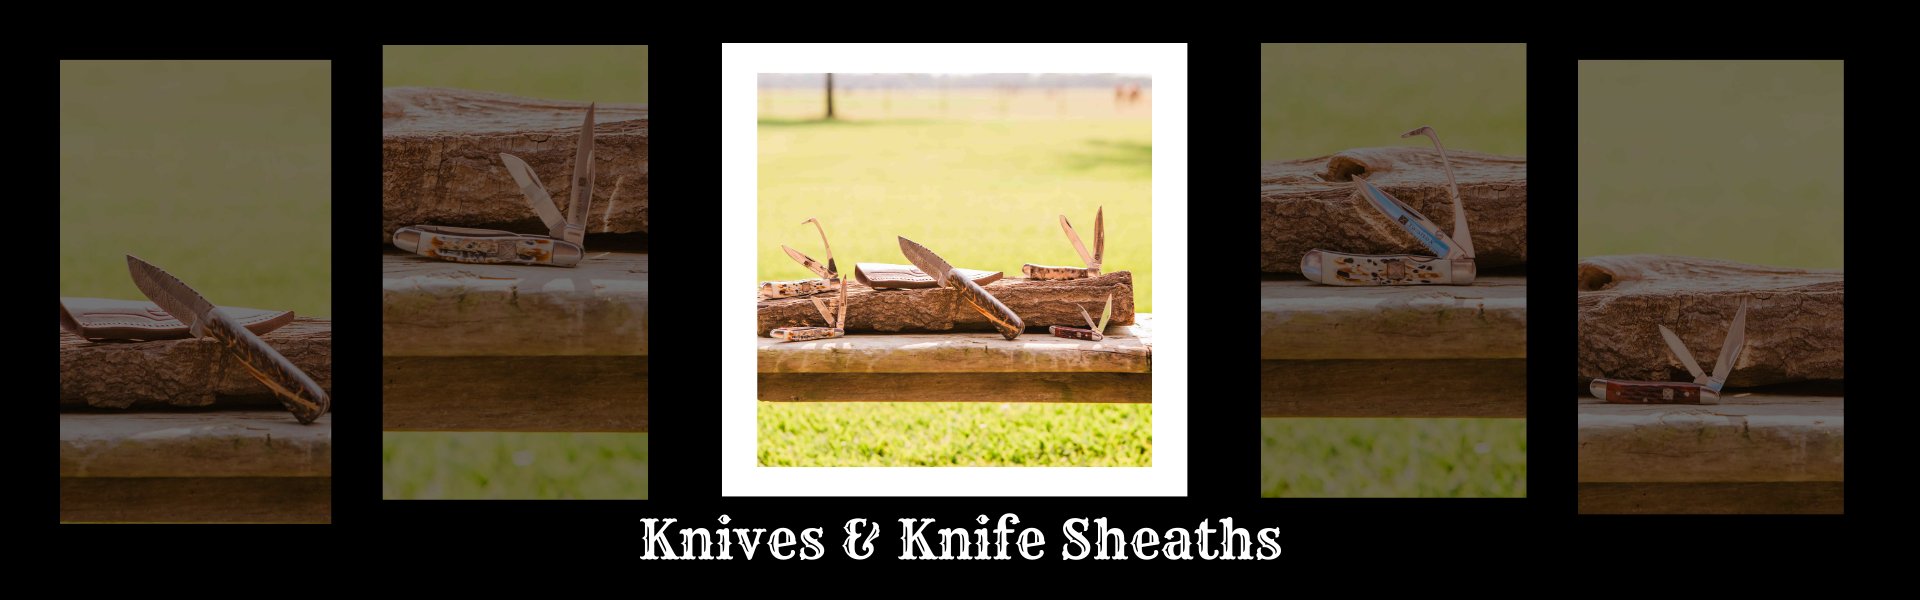 Knives & Knife Sheaths